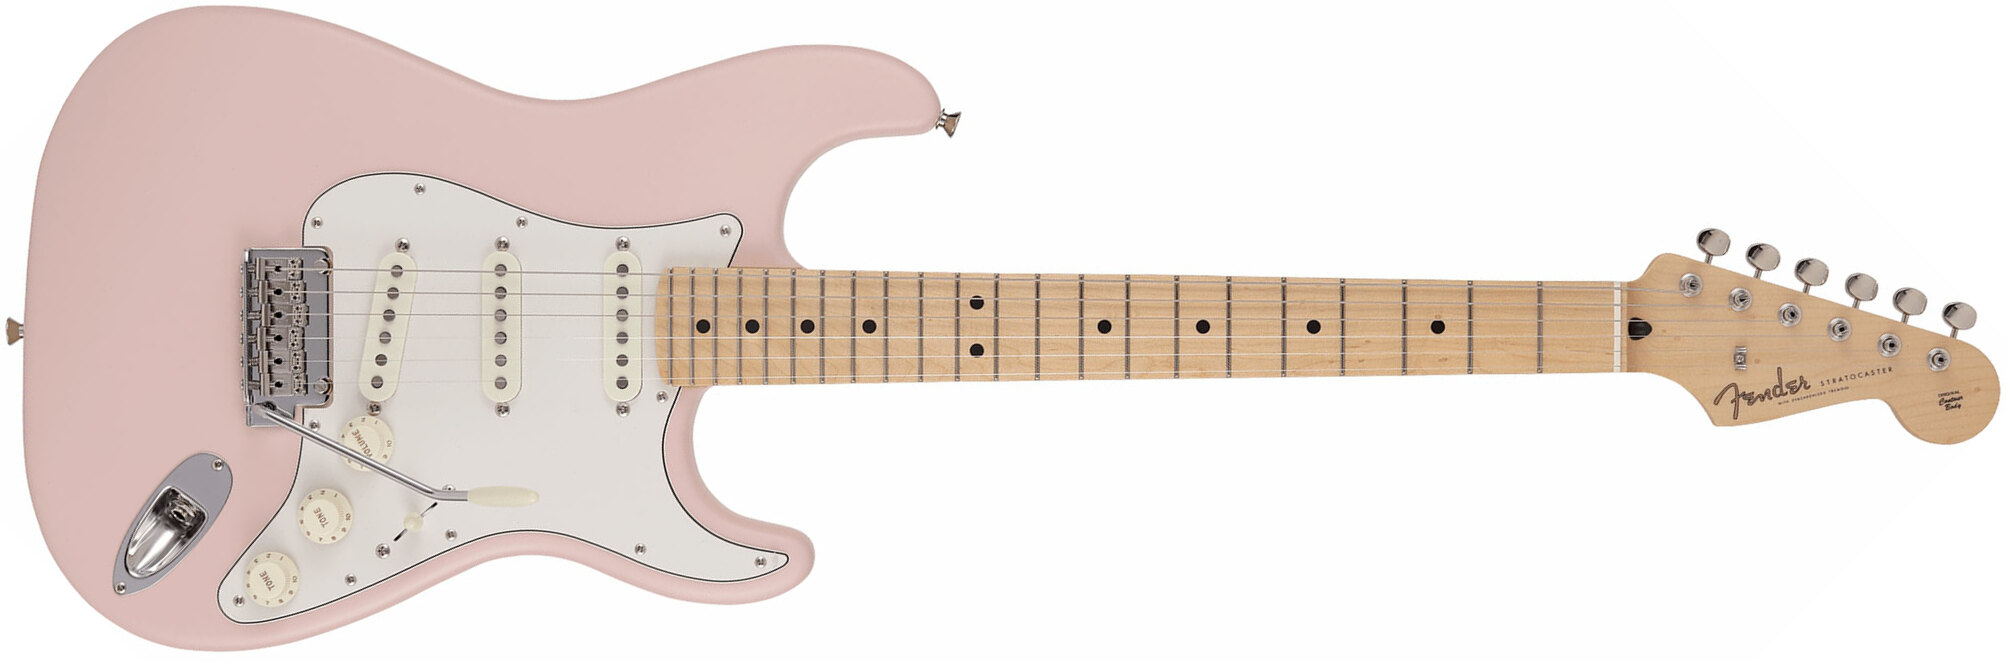 Fender Strat Junior Mij Jap 3s Trem Rw - Satin Shell Pink - Guitarra eléctrica para niños - Main picture